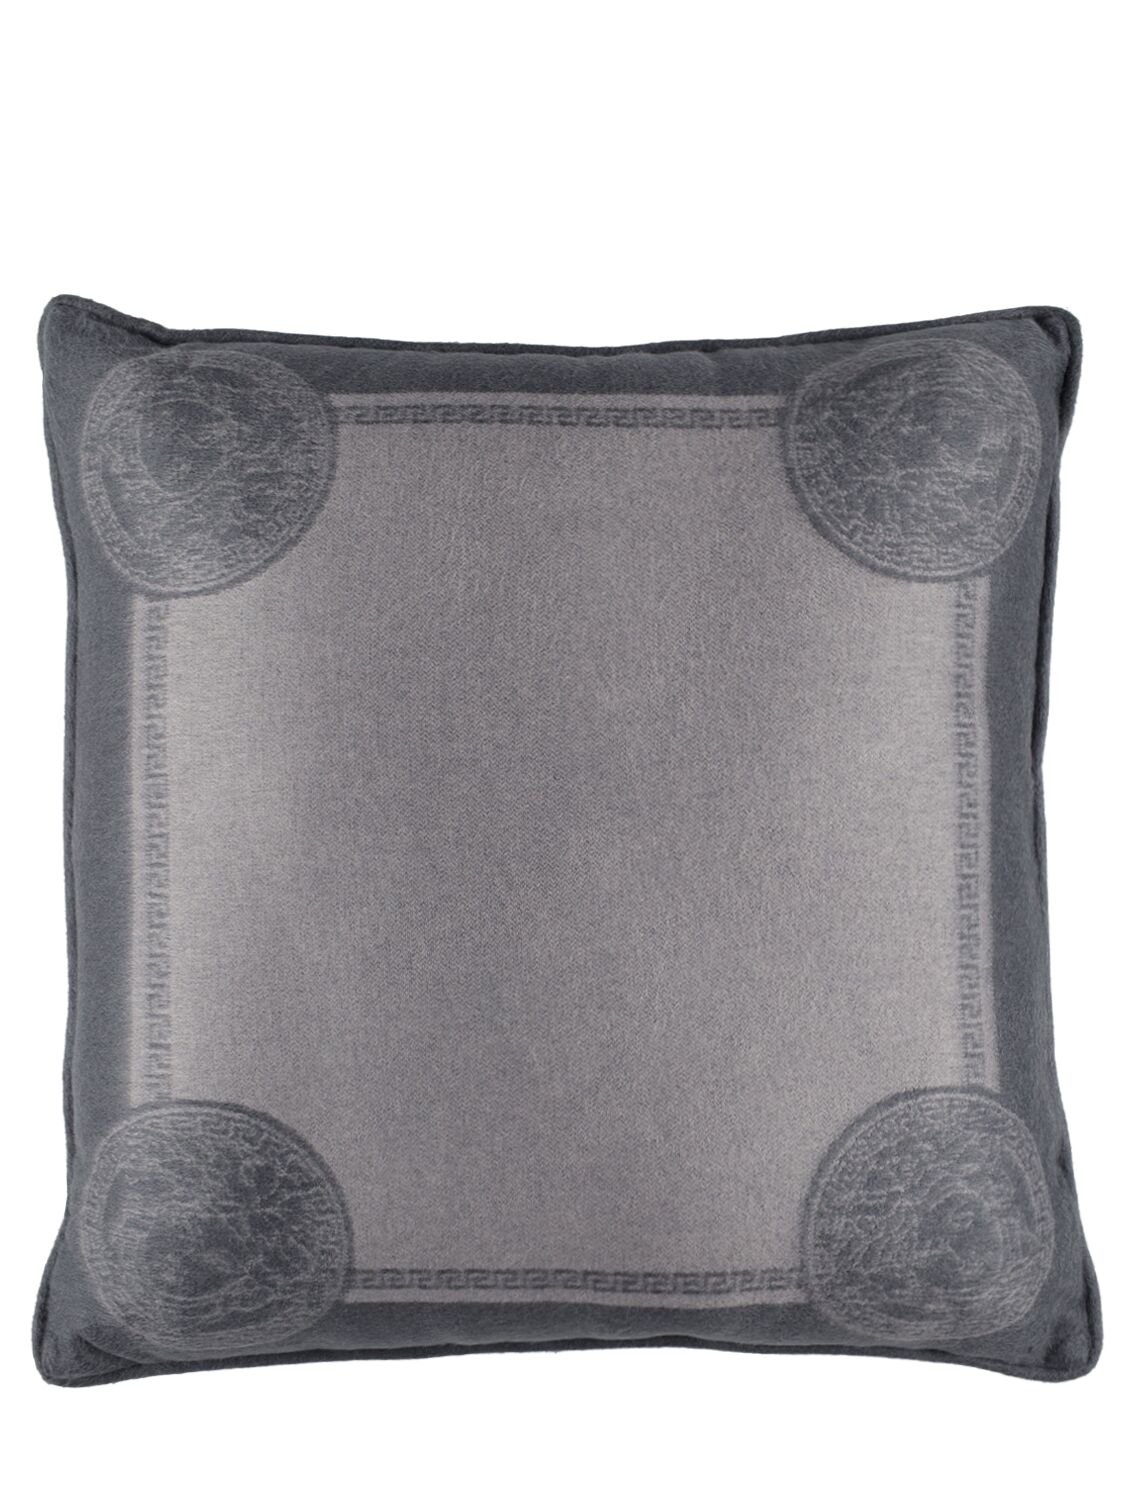 Versace Medusa Cushion In Black